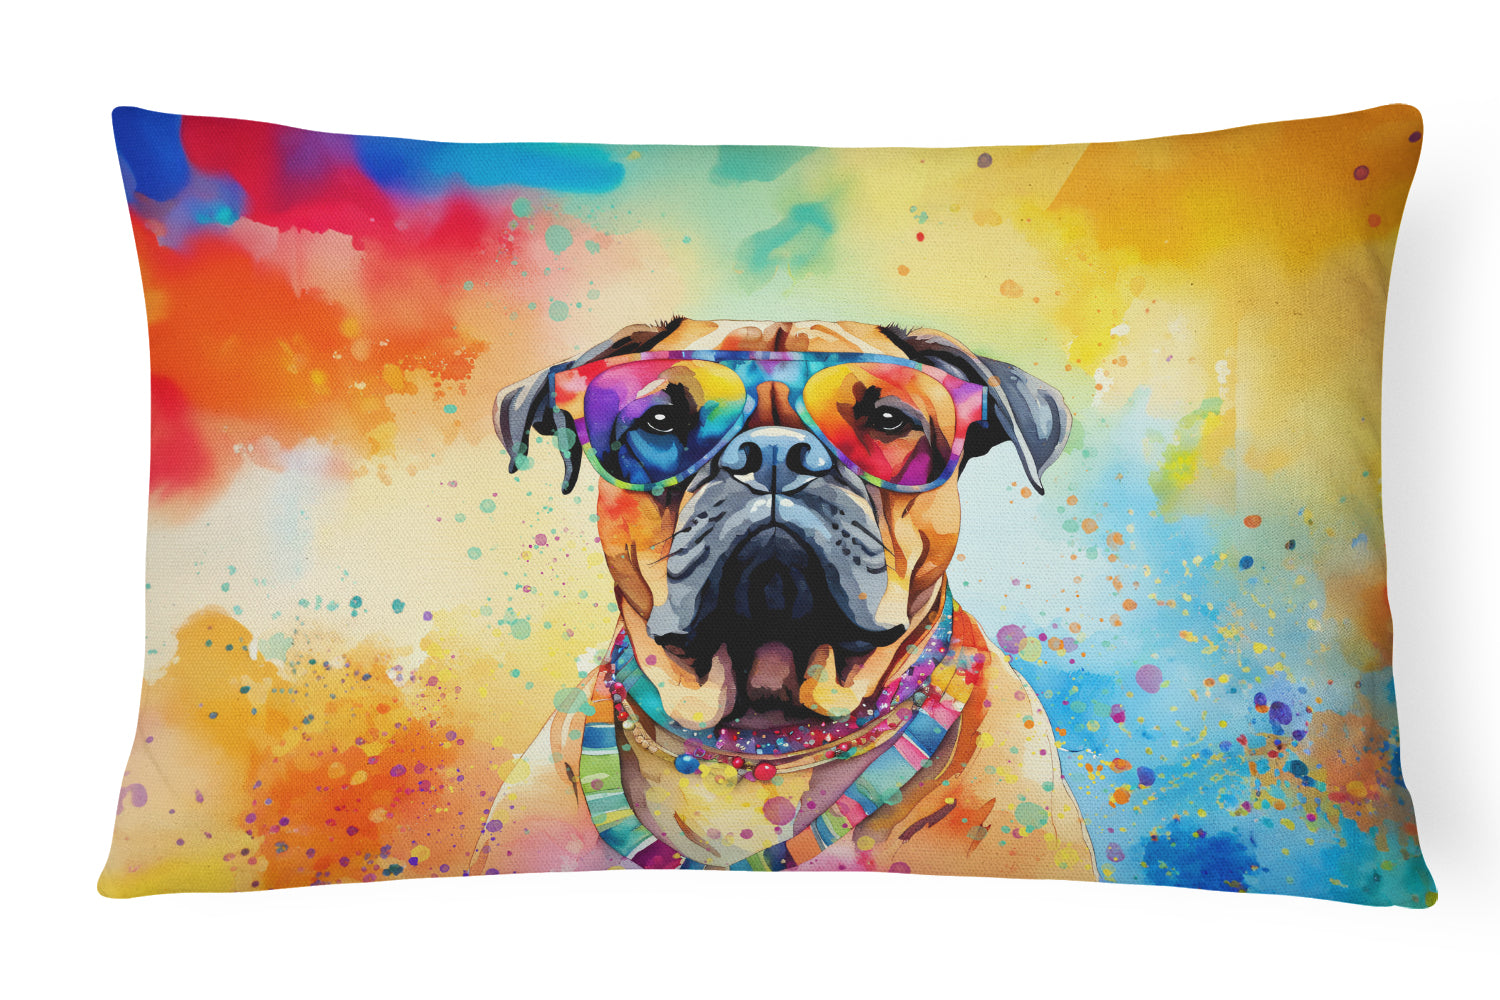 Buy this Bullmastiff Hippie Dawg Fabric Decorative Pillow